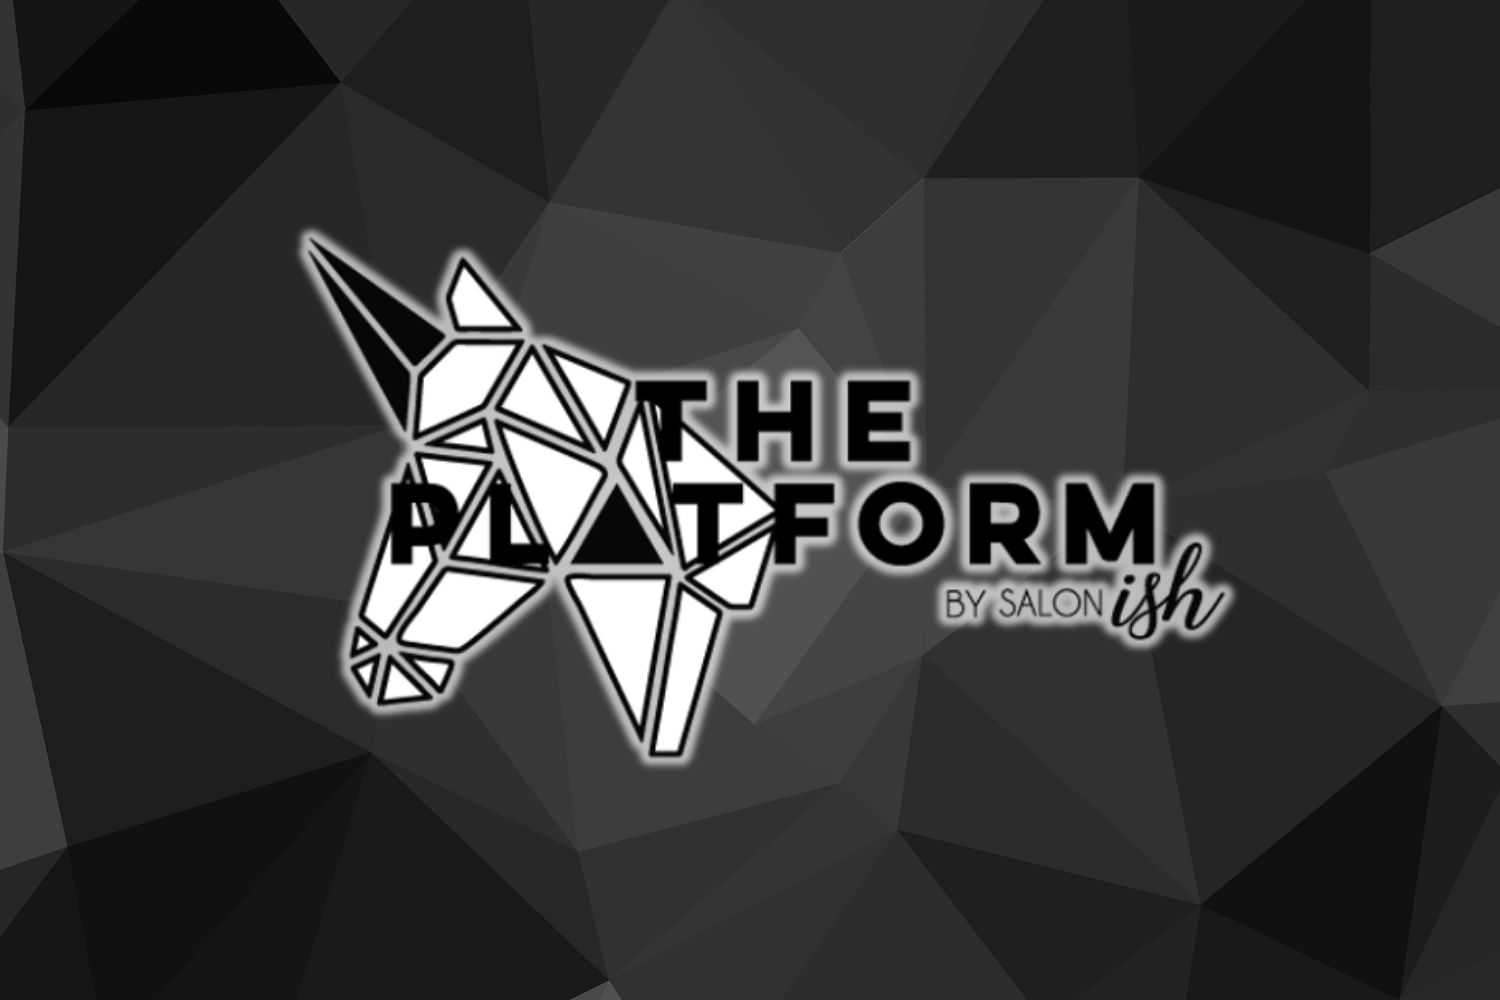 Logo of 'THE PLATFORM BY SALON-ish' with a stylized unicorn head.